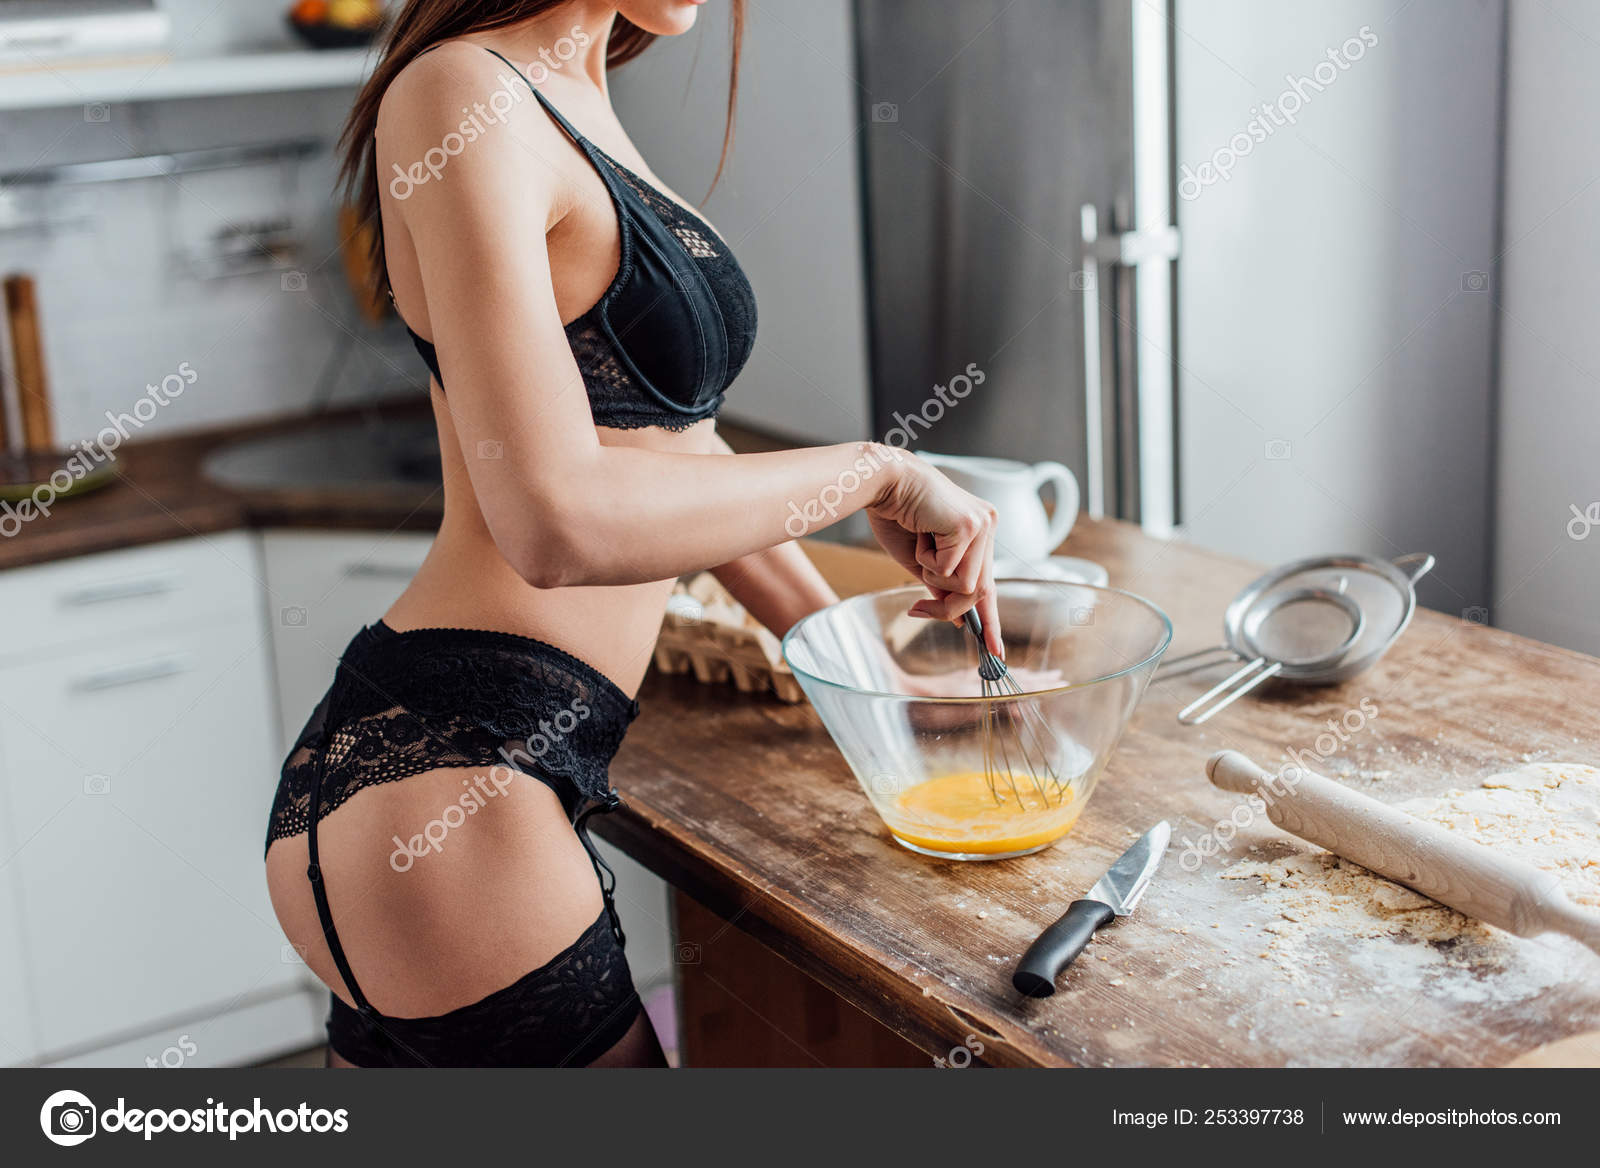 Sexy Black Women In The Kitchen